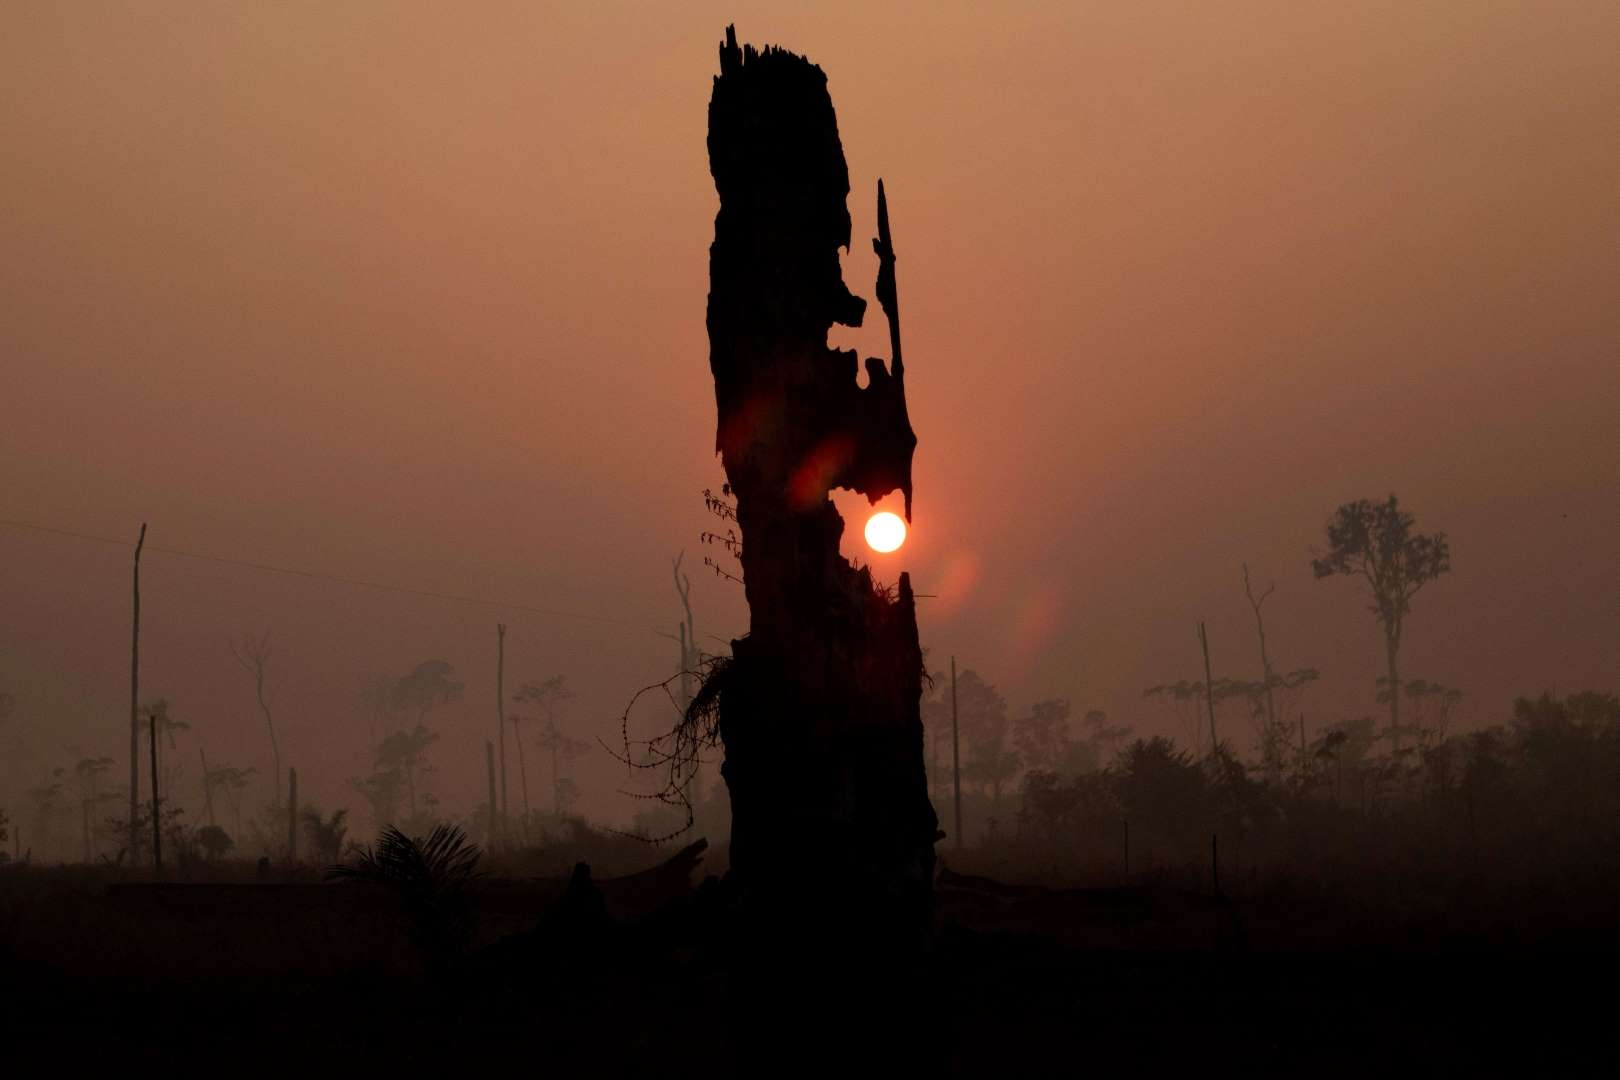 The sun shines red through smoke and dust left by the fires in the Amazon rainforest, near Porto Velho, Brazil, on 29 August 2019. Photo: Joedson Alves / EPA-EFE / Shutterstock